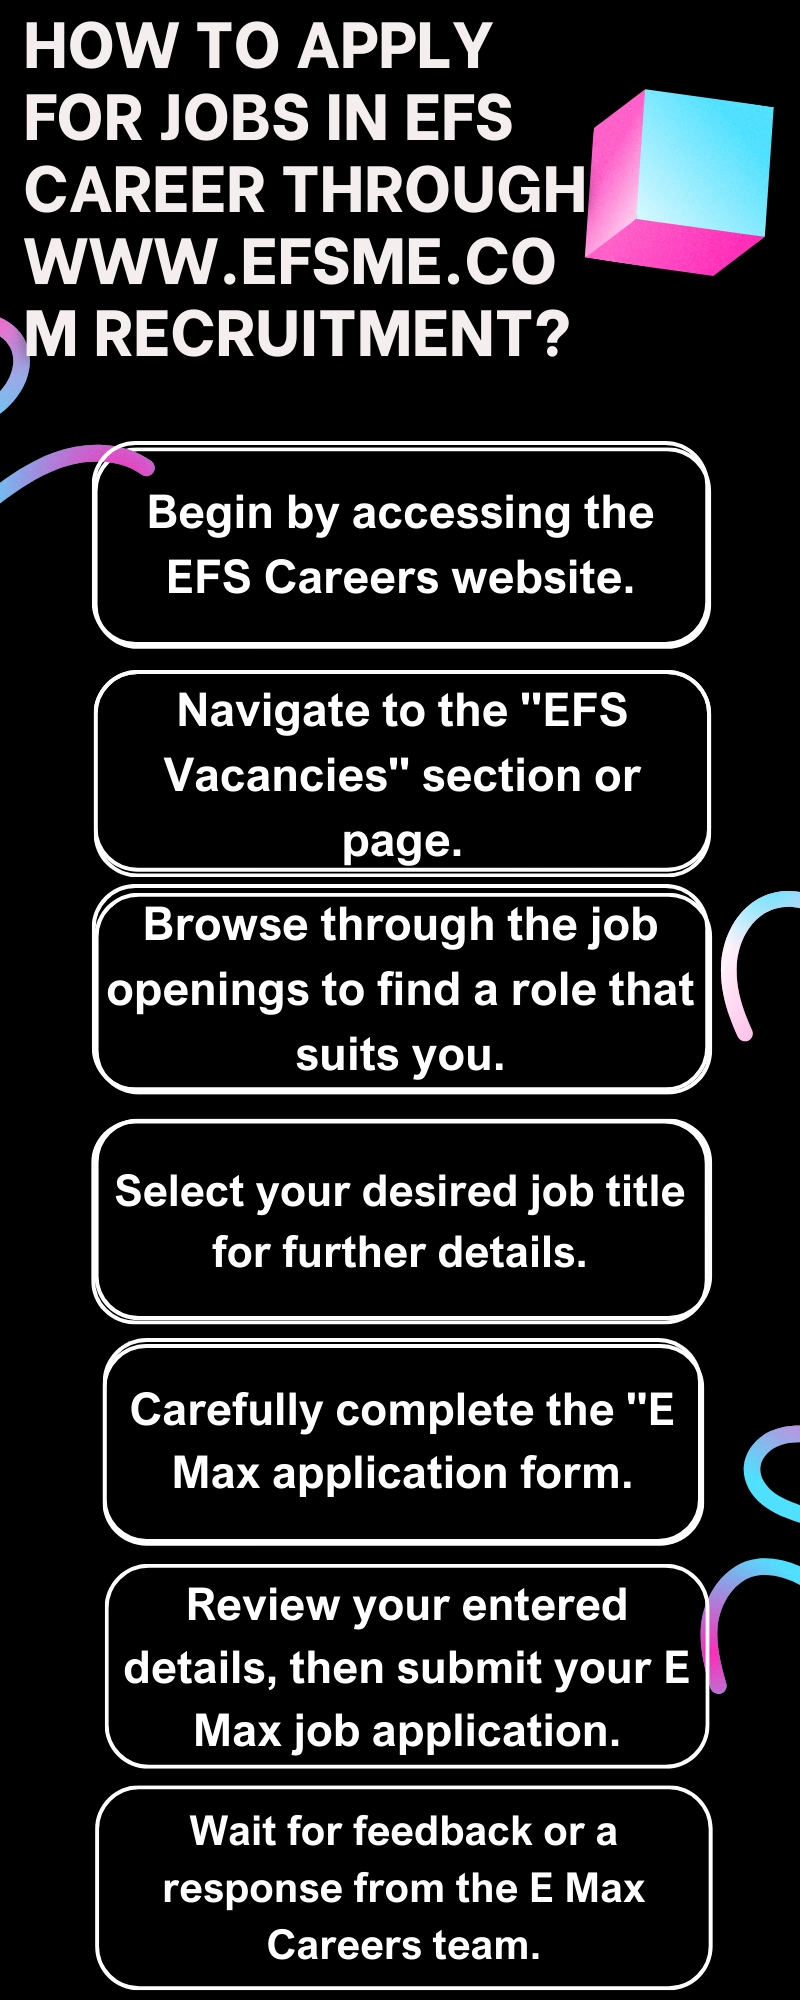 How to Apply for Jobs in EFS Career through www.efsme.com recruitment?